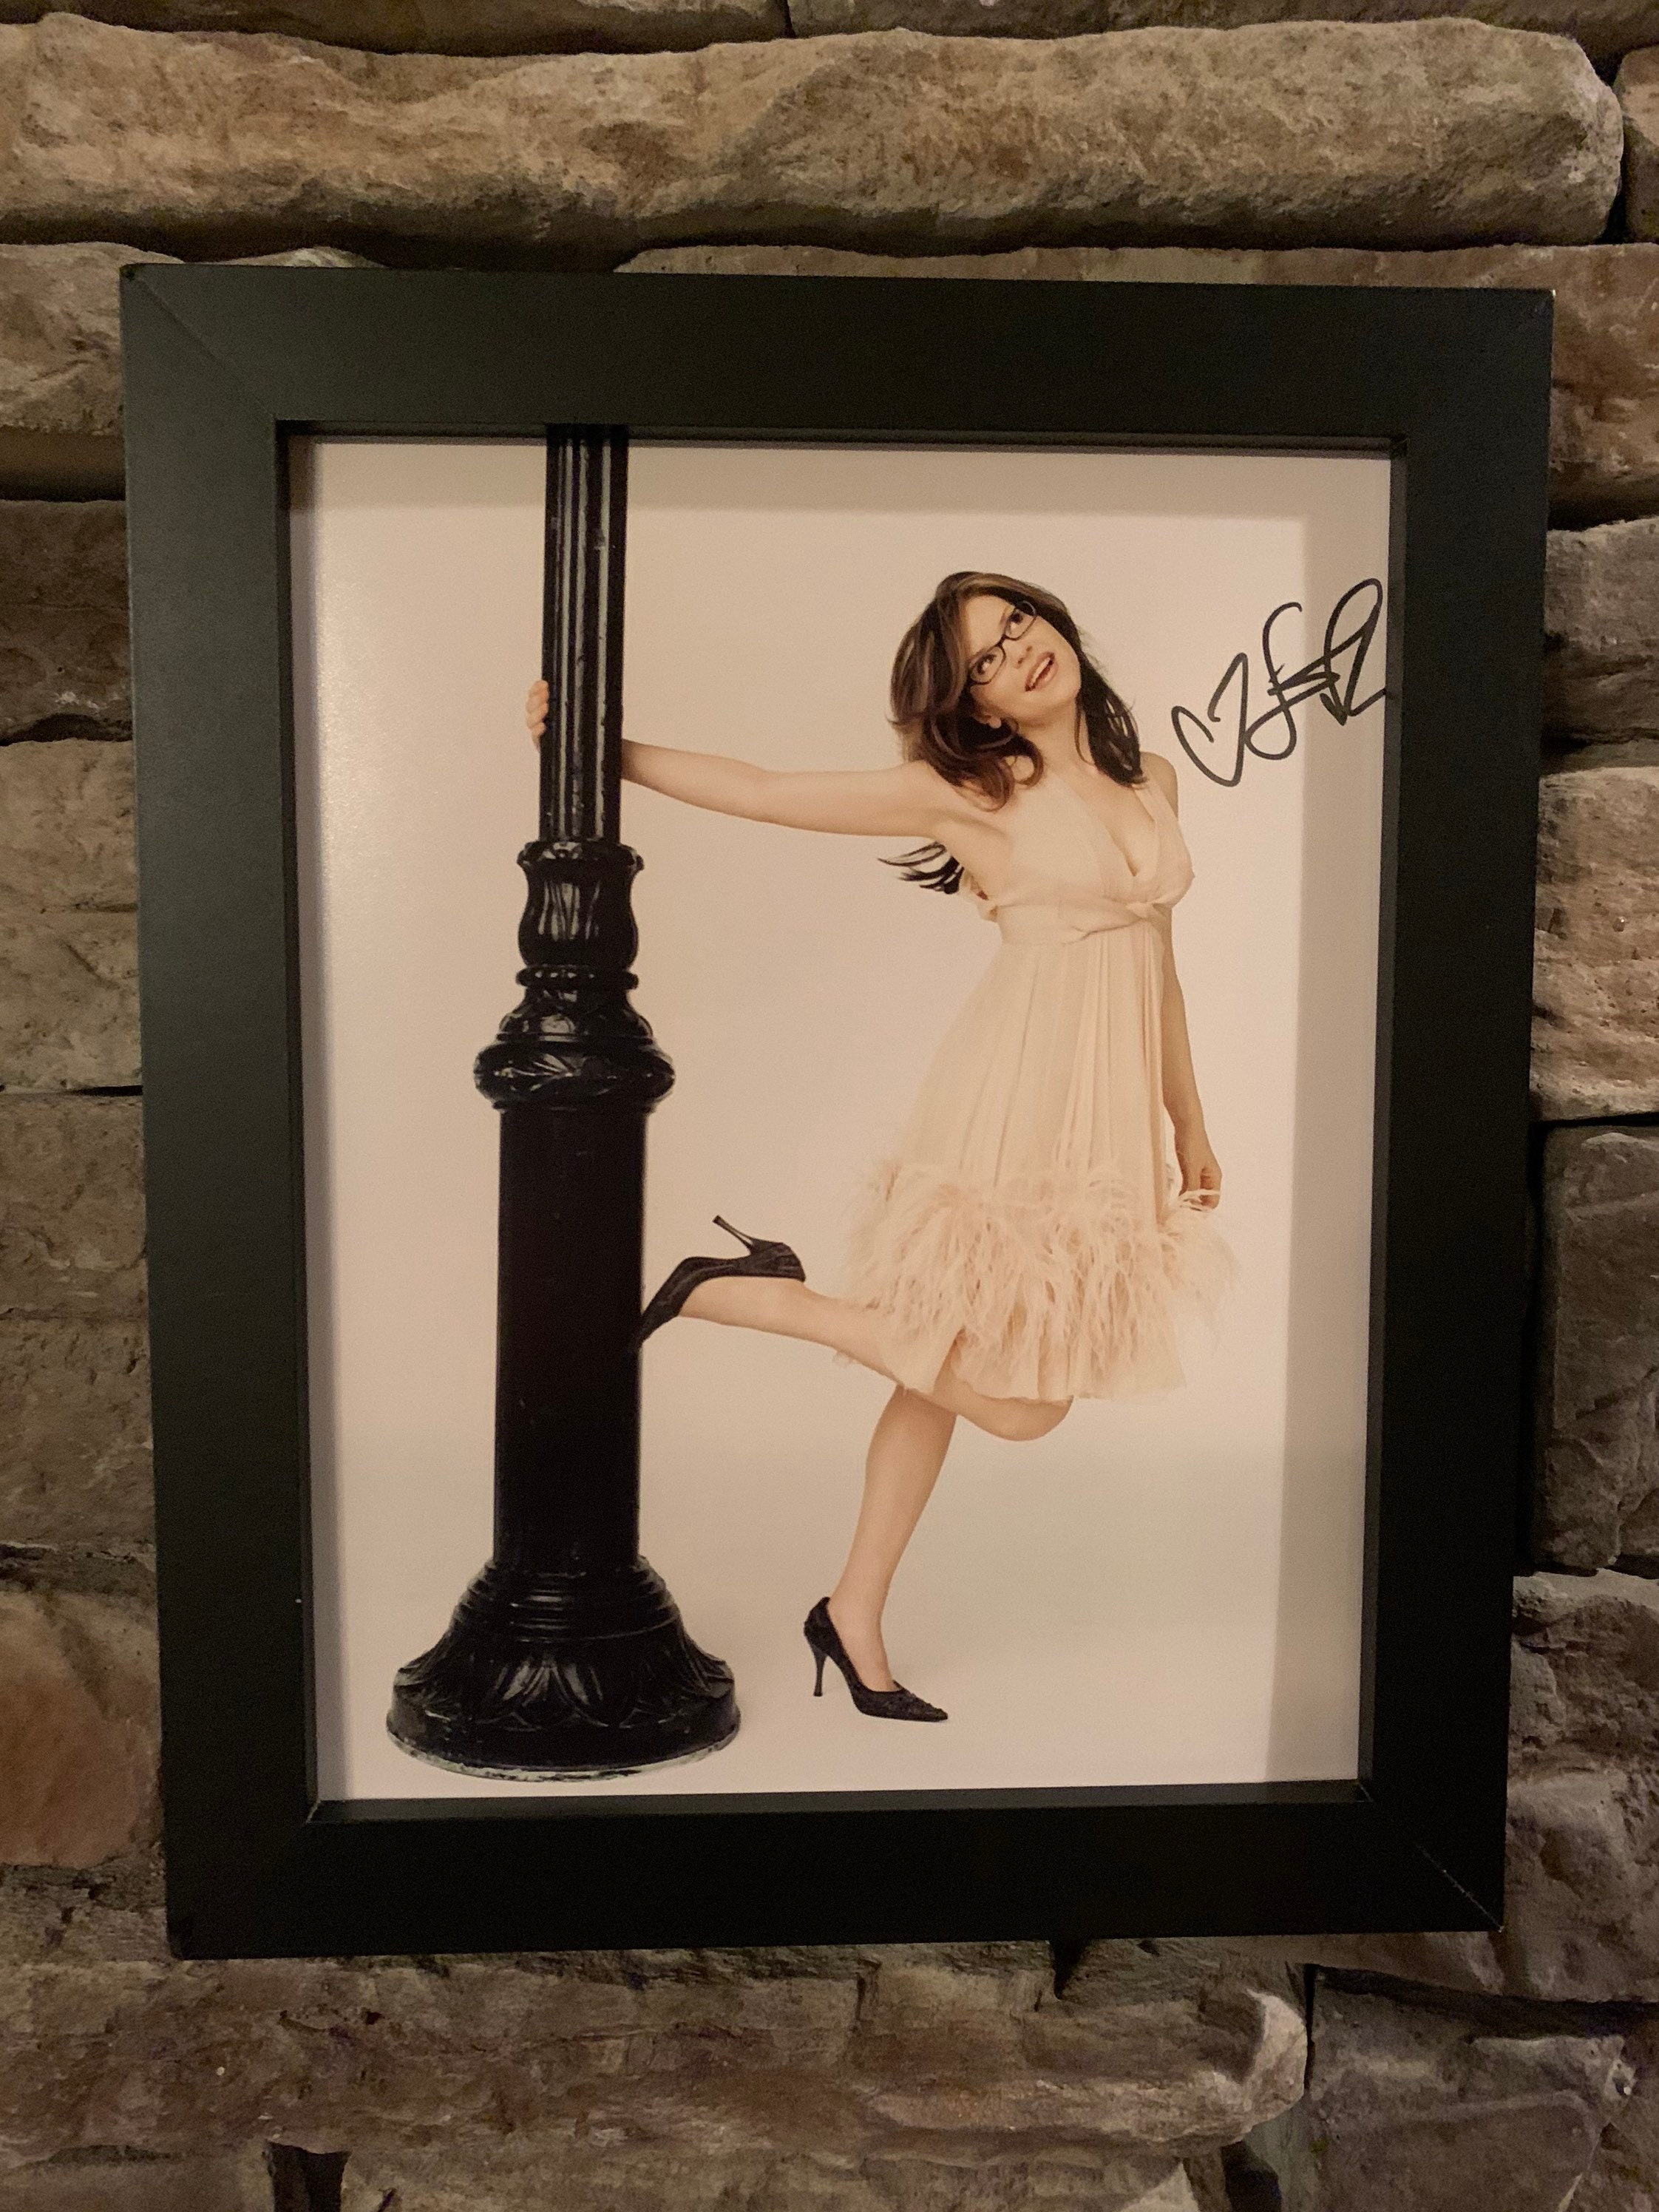 Autographed Lisa Loeb 8x10inch framed photo with COA.